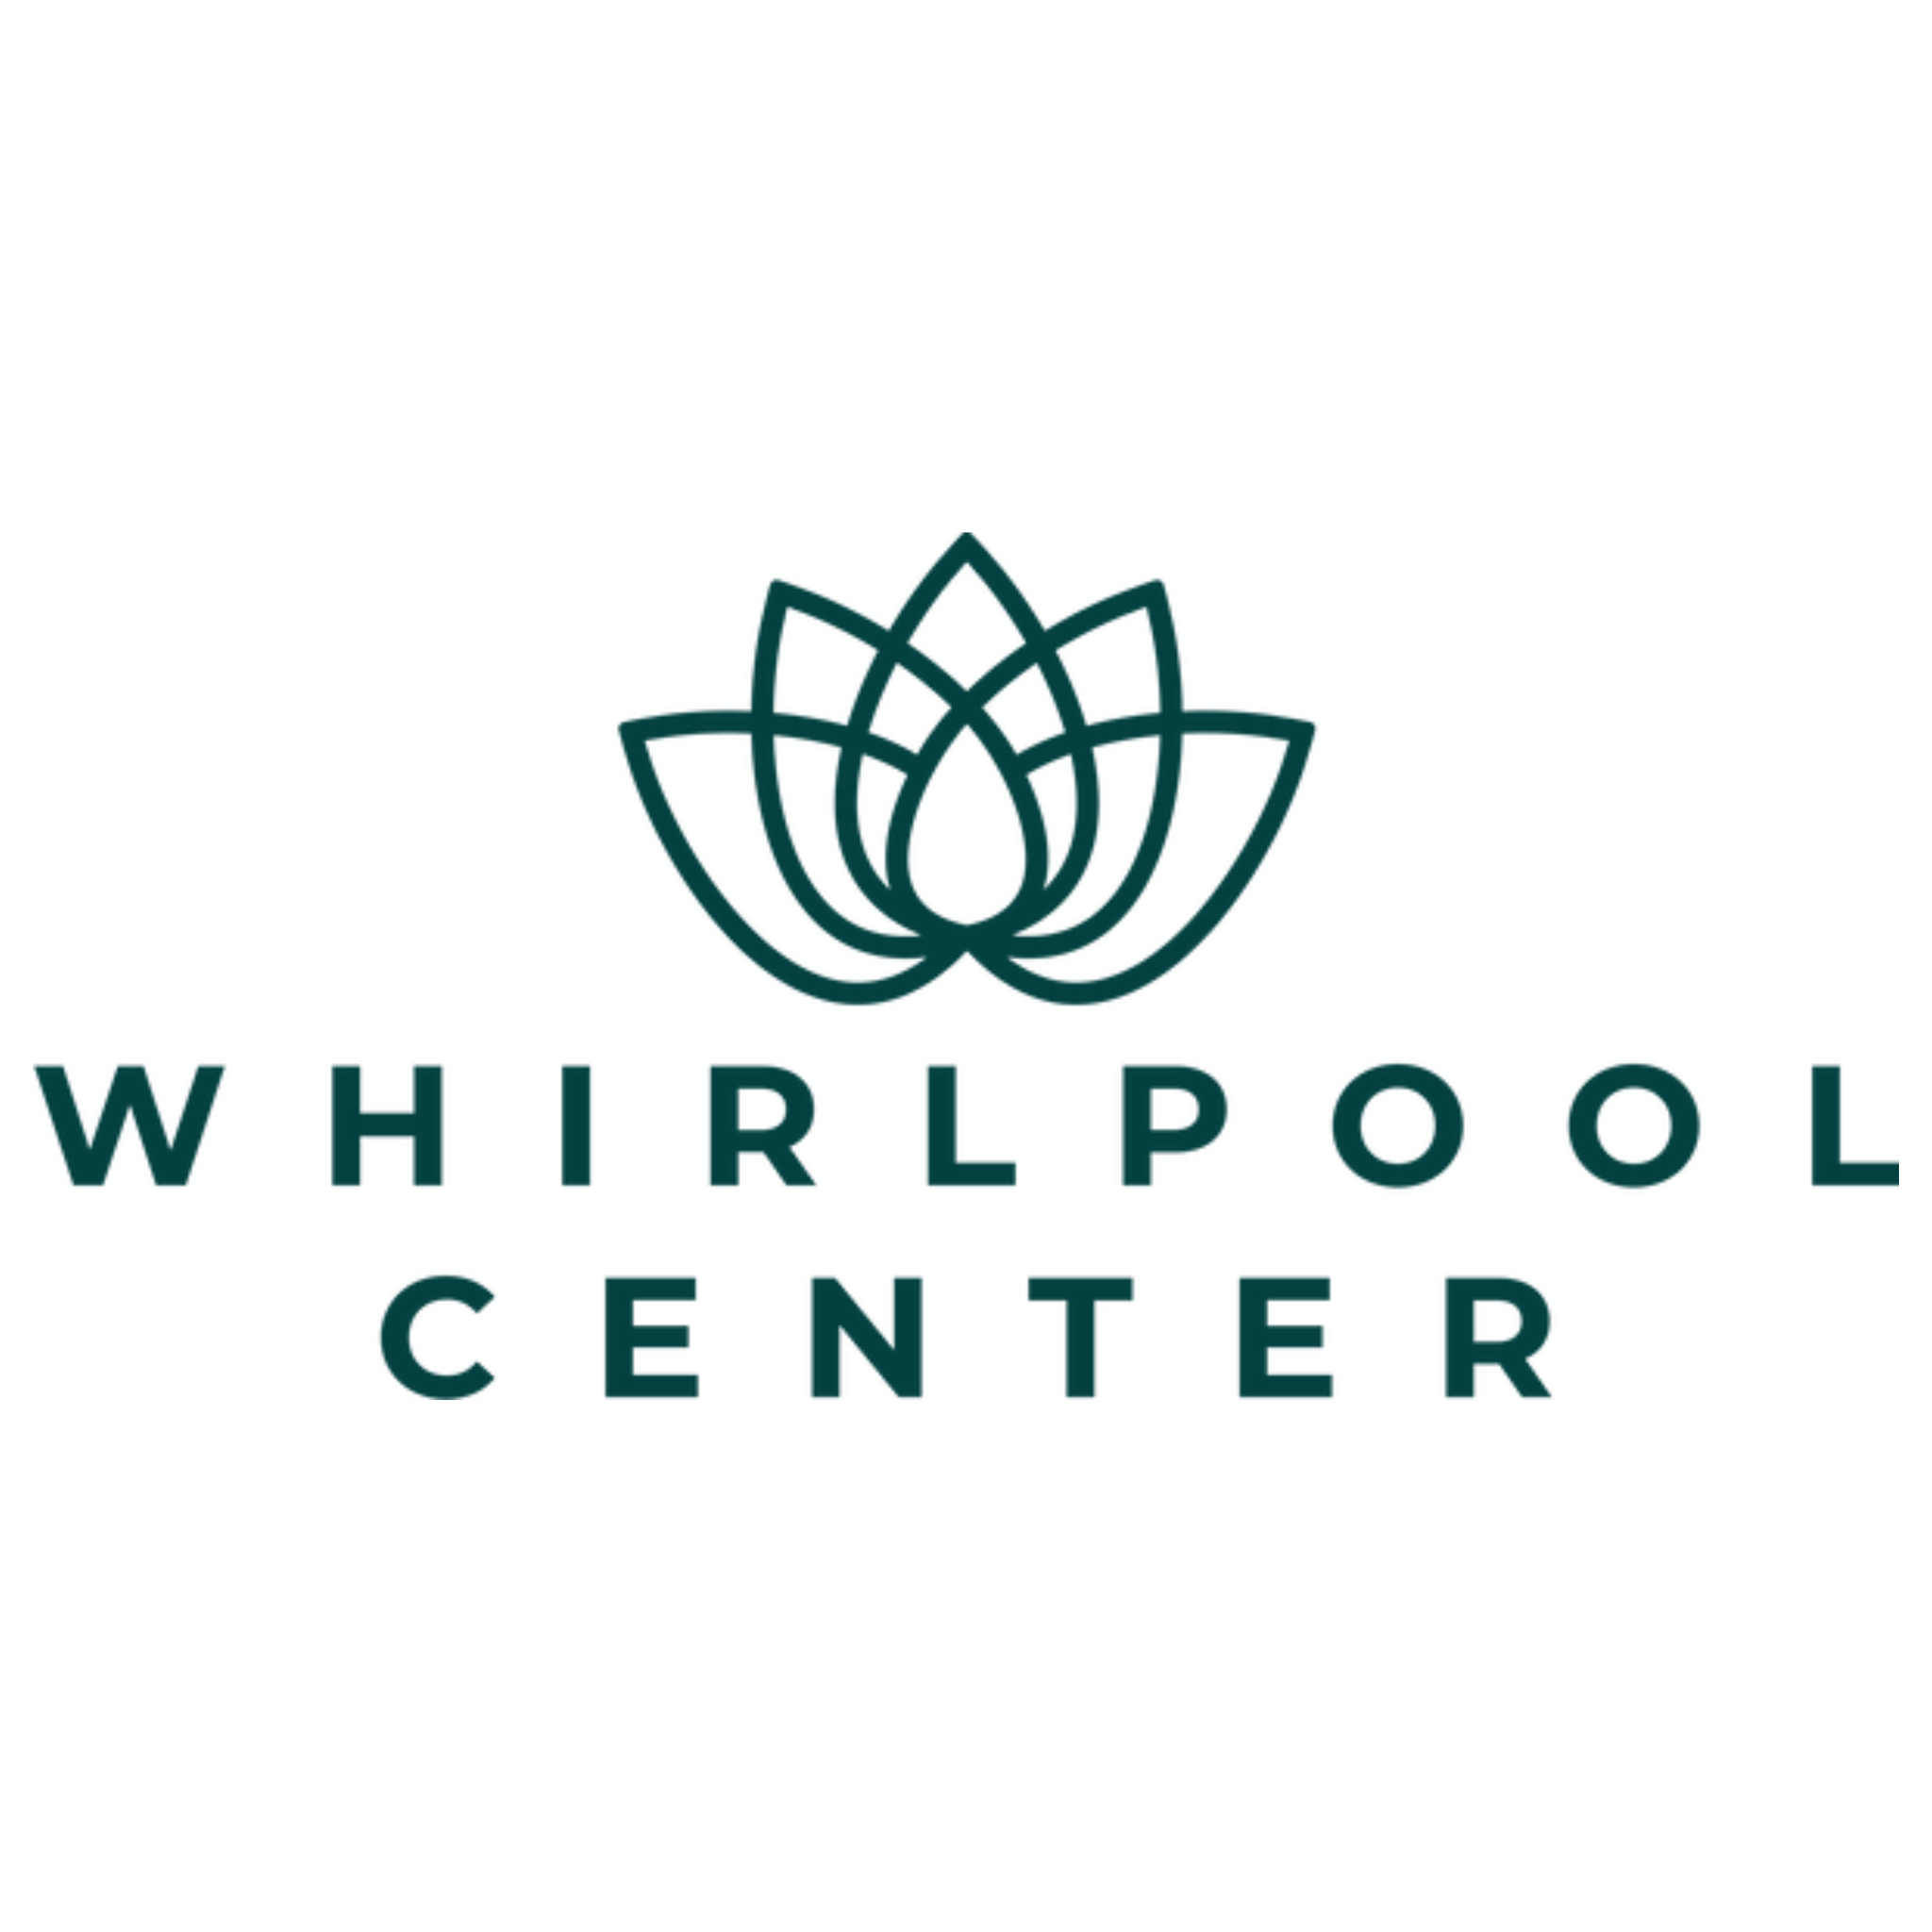 Whirlpool Center in Bielefeld - Logo